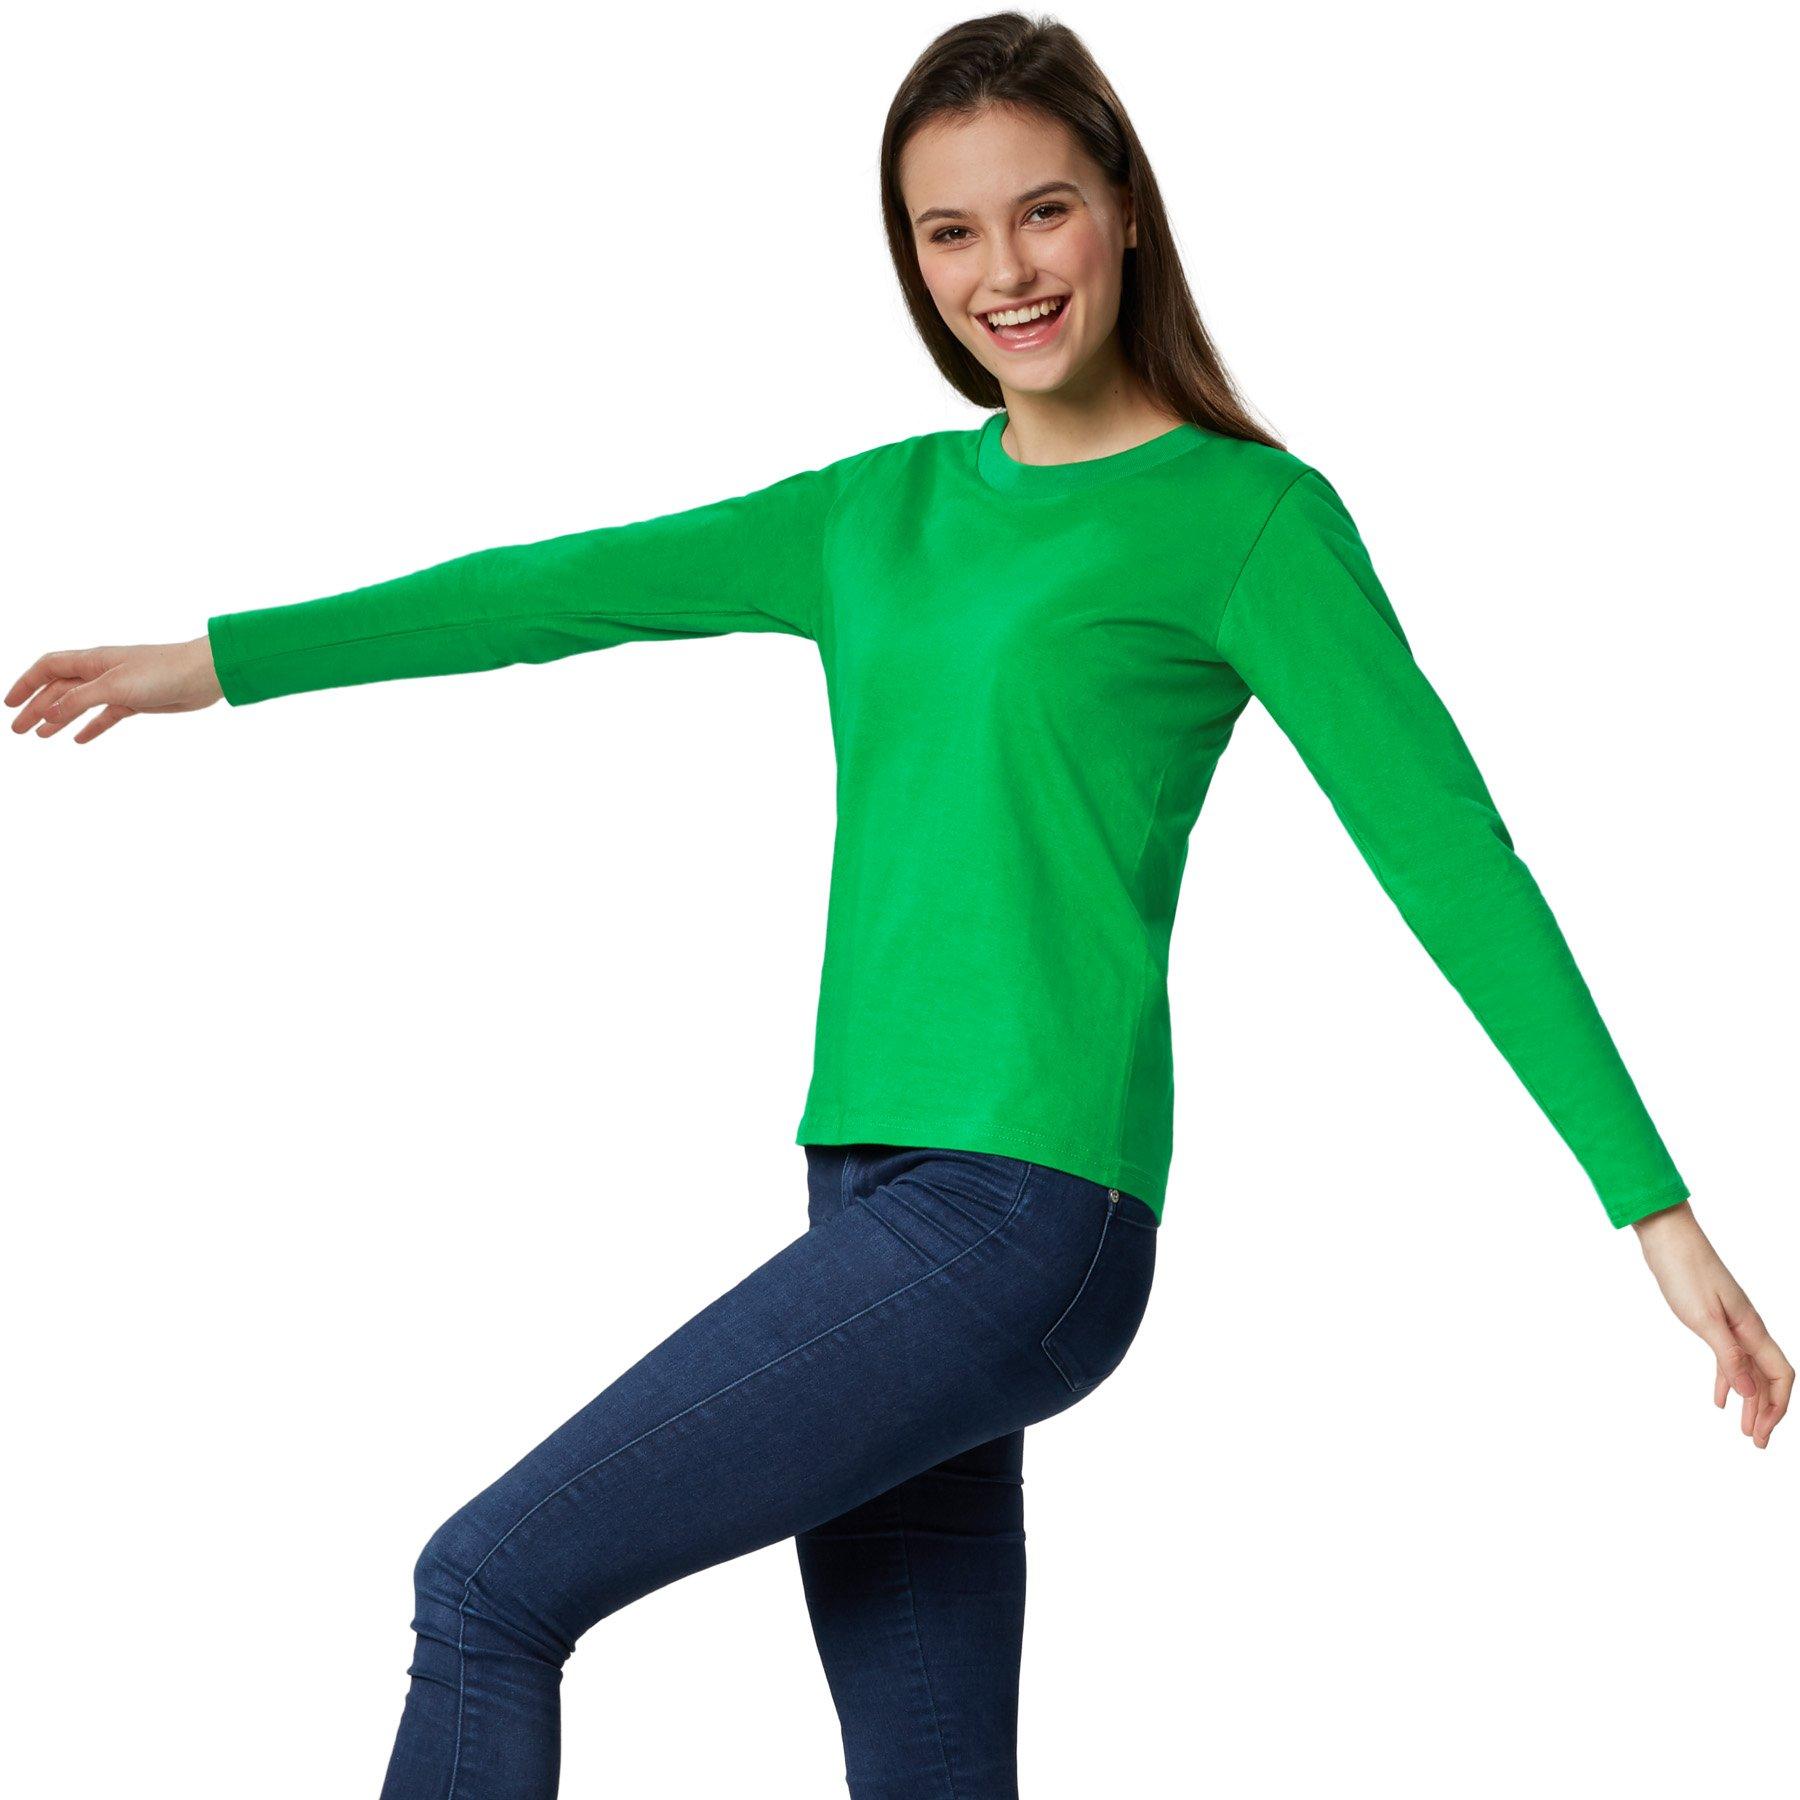 Langarm-shirt Frauen Damen Grün L von Tectake